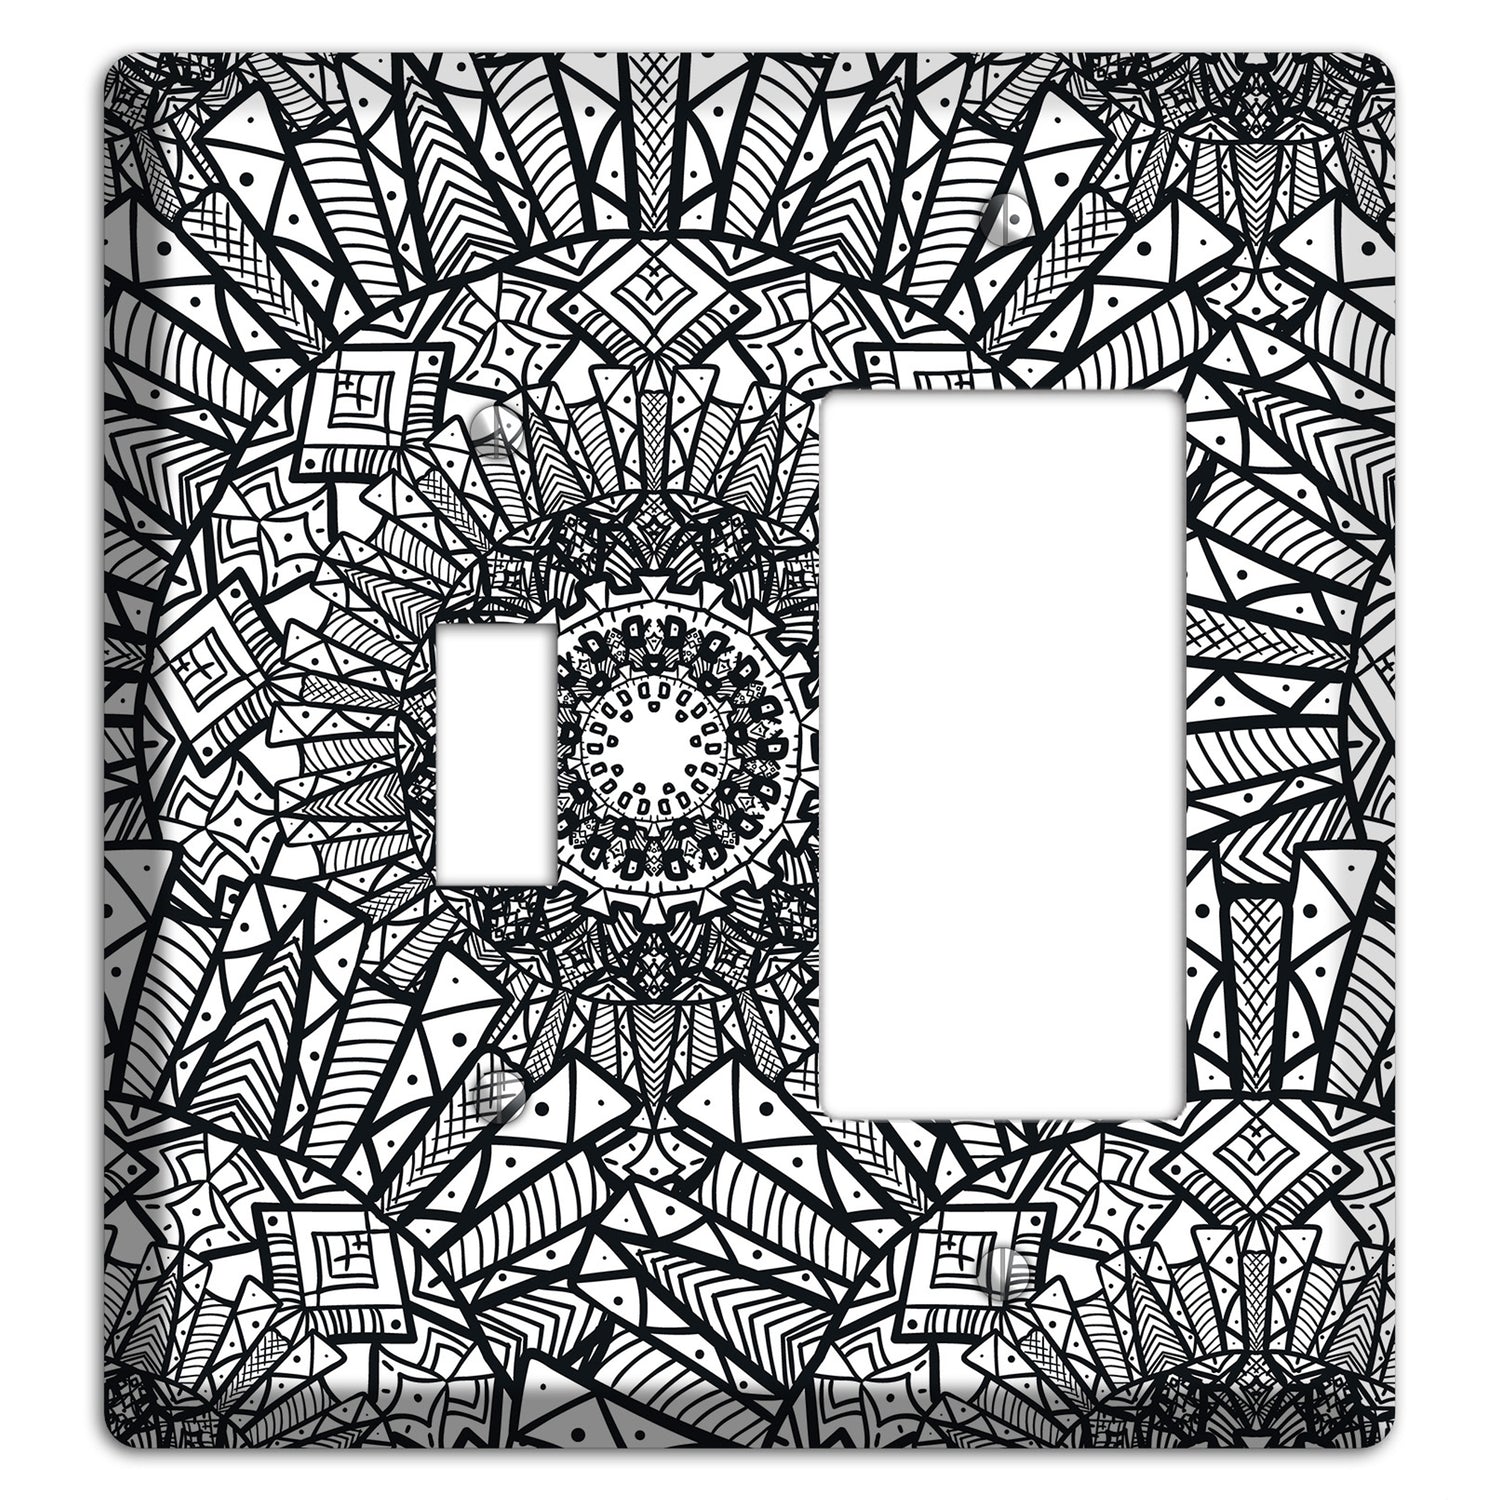 Mandala Black and White Style X Cover Plates Toggle / Rocker Wallplate